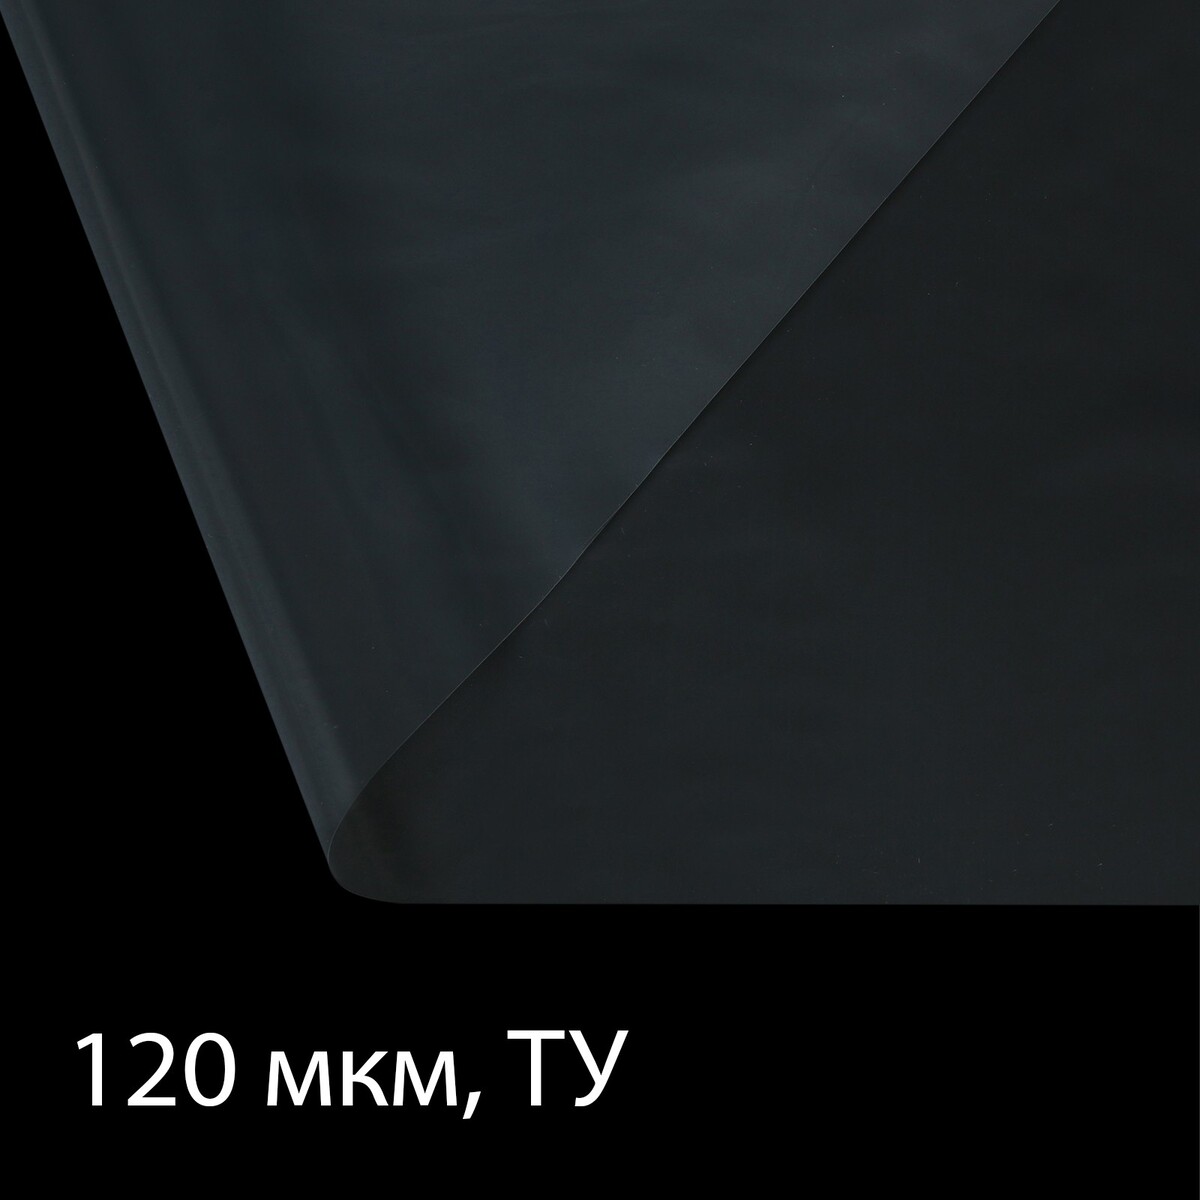 Пленка полиэтиленовая 120 мкм, прозрачная, длина 10 м, ширина 3 м, рукав (1.5 м × 2), эконом 50% пленка полиэтиленовая прозрачная рукав 1 5 × 2 м толщина 60 мкм 10 × 3 м эконом 50%